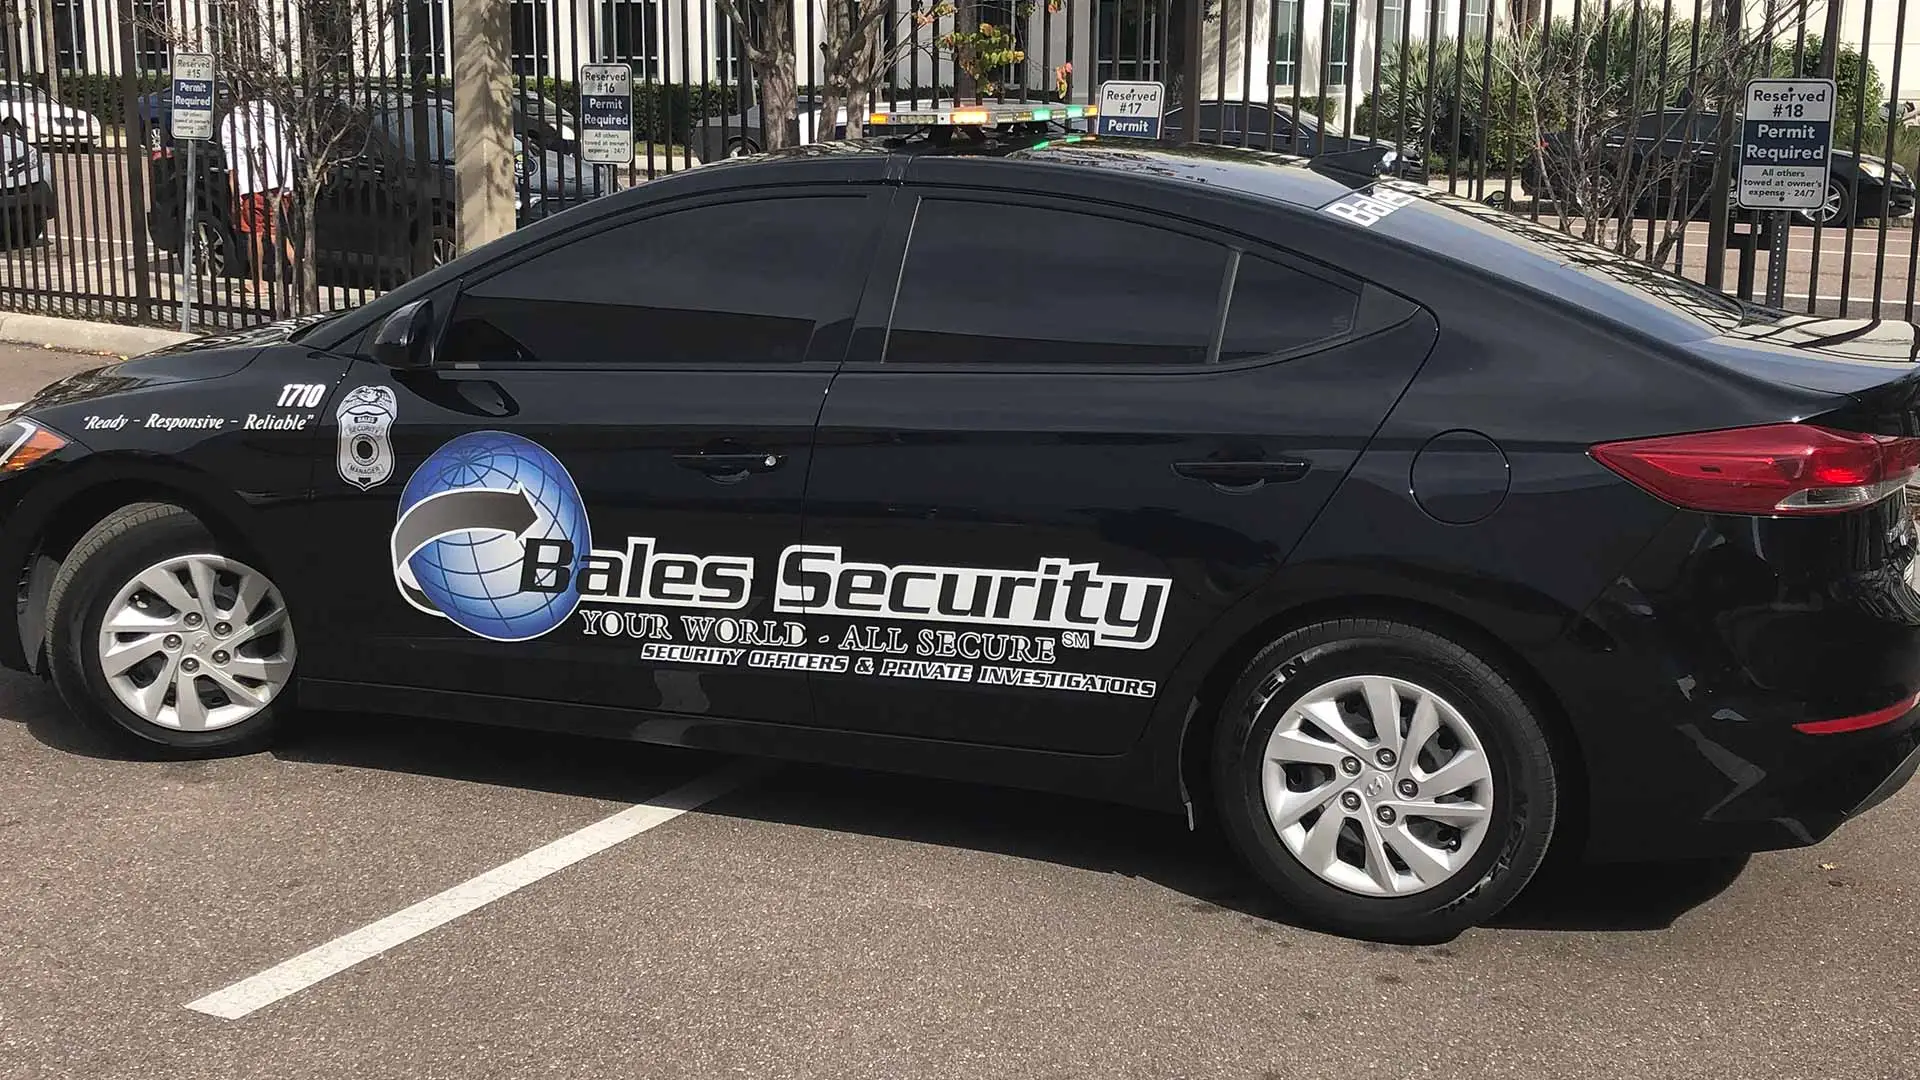 Bales Security patrol vehicle in Tampa, FL.